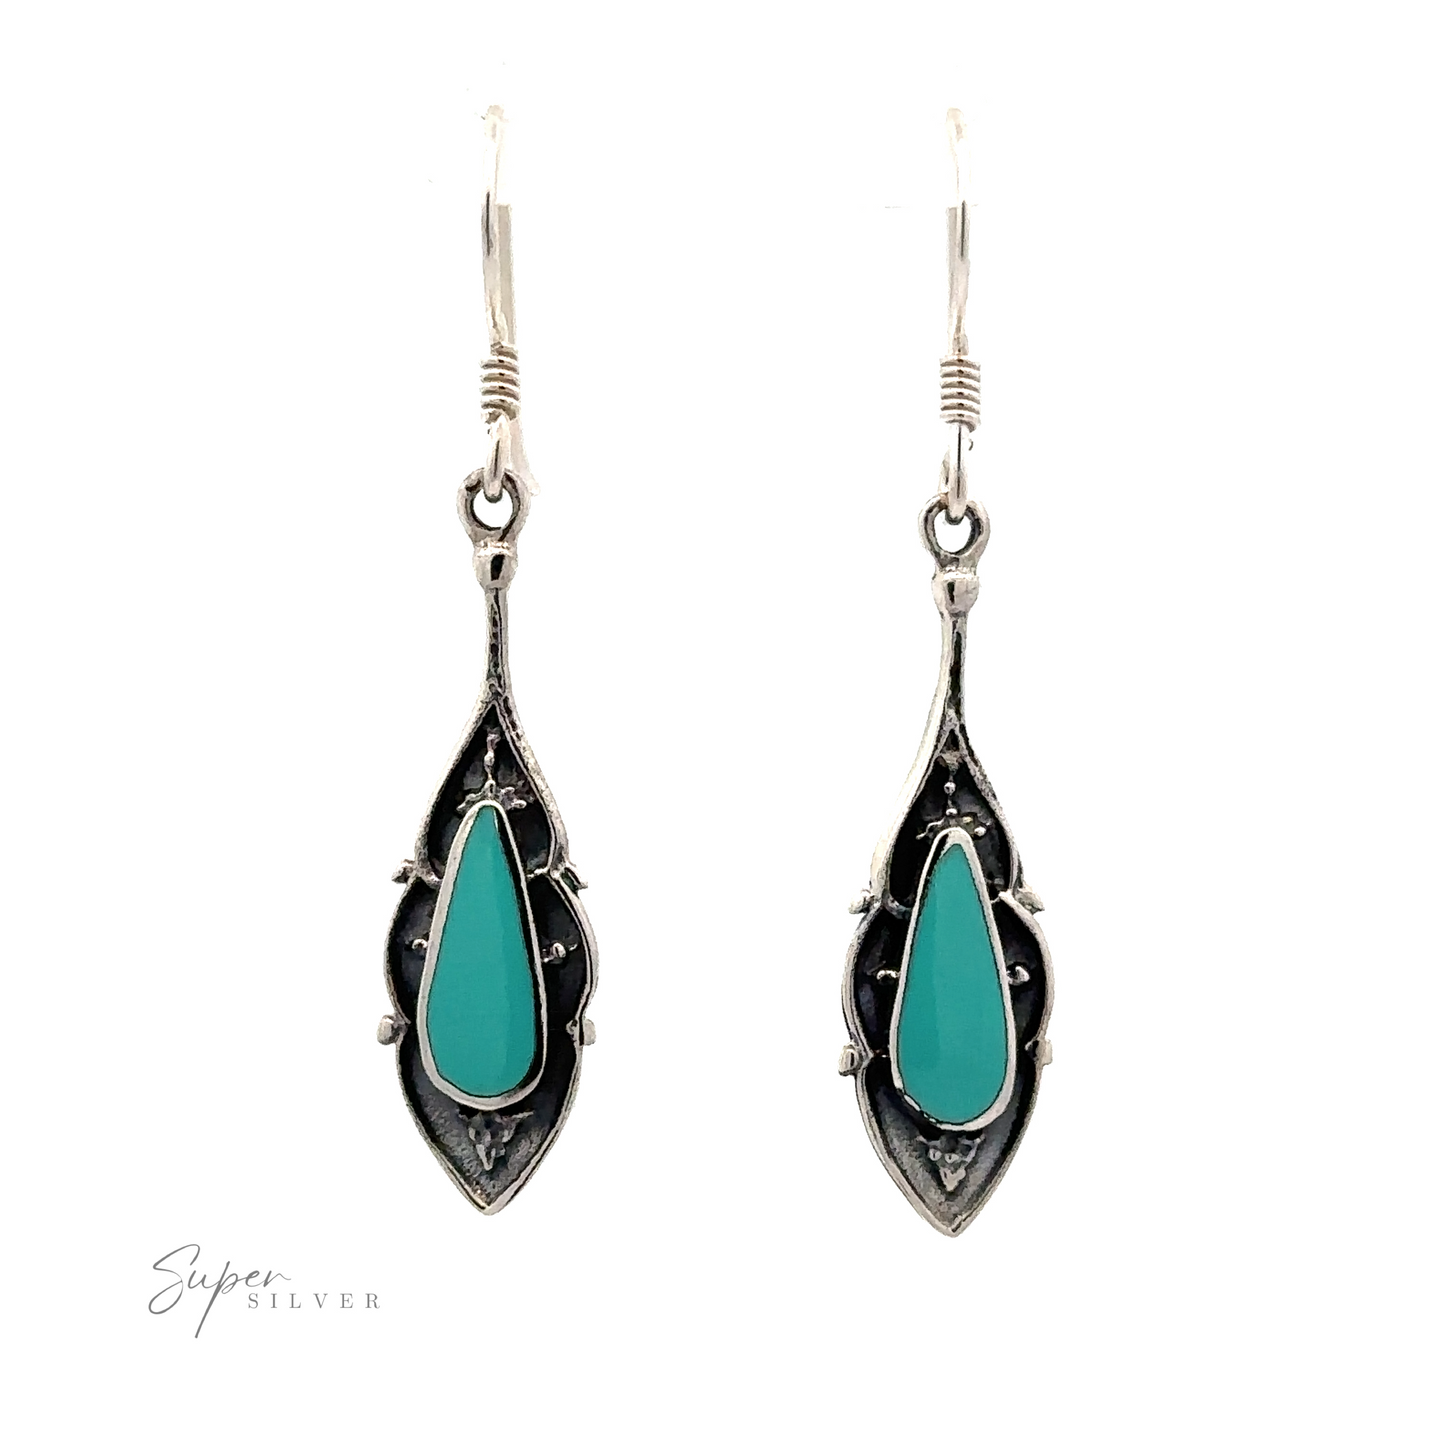 
                  
                    A pair of Teardrop Shape Inlaid Earrings with turquoise stones set in ornate, leaf-like metalwork.
                  
                